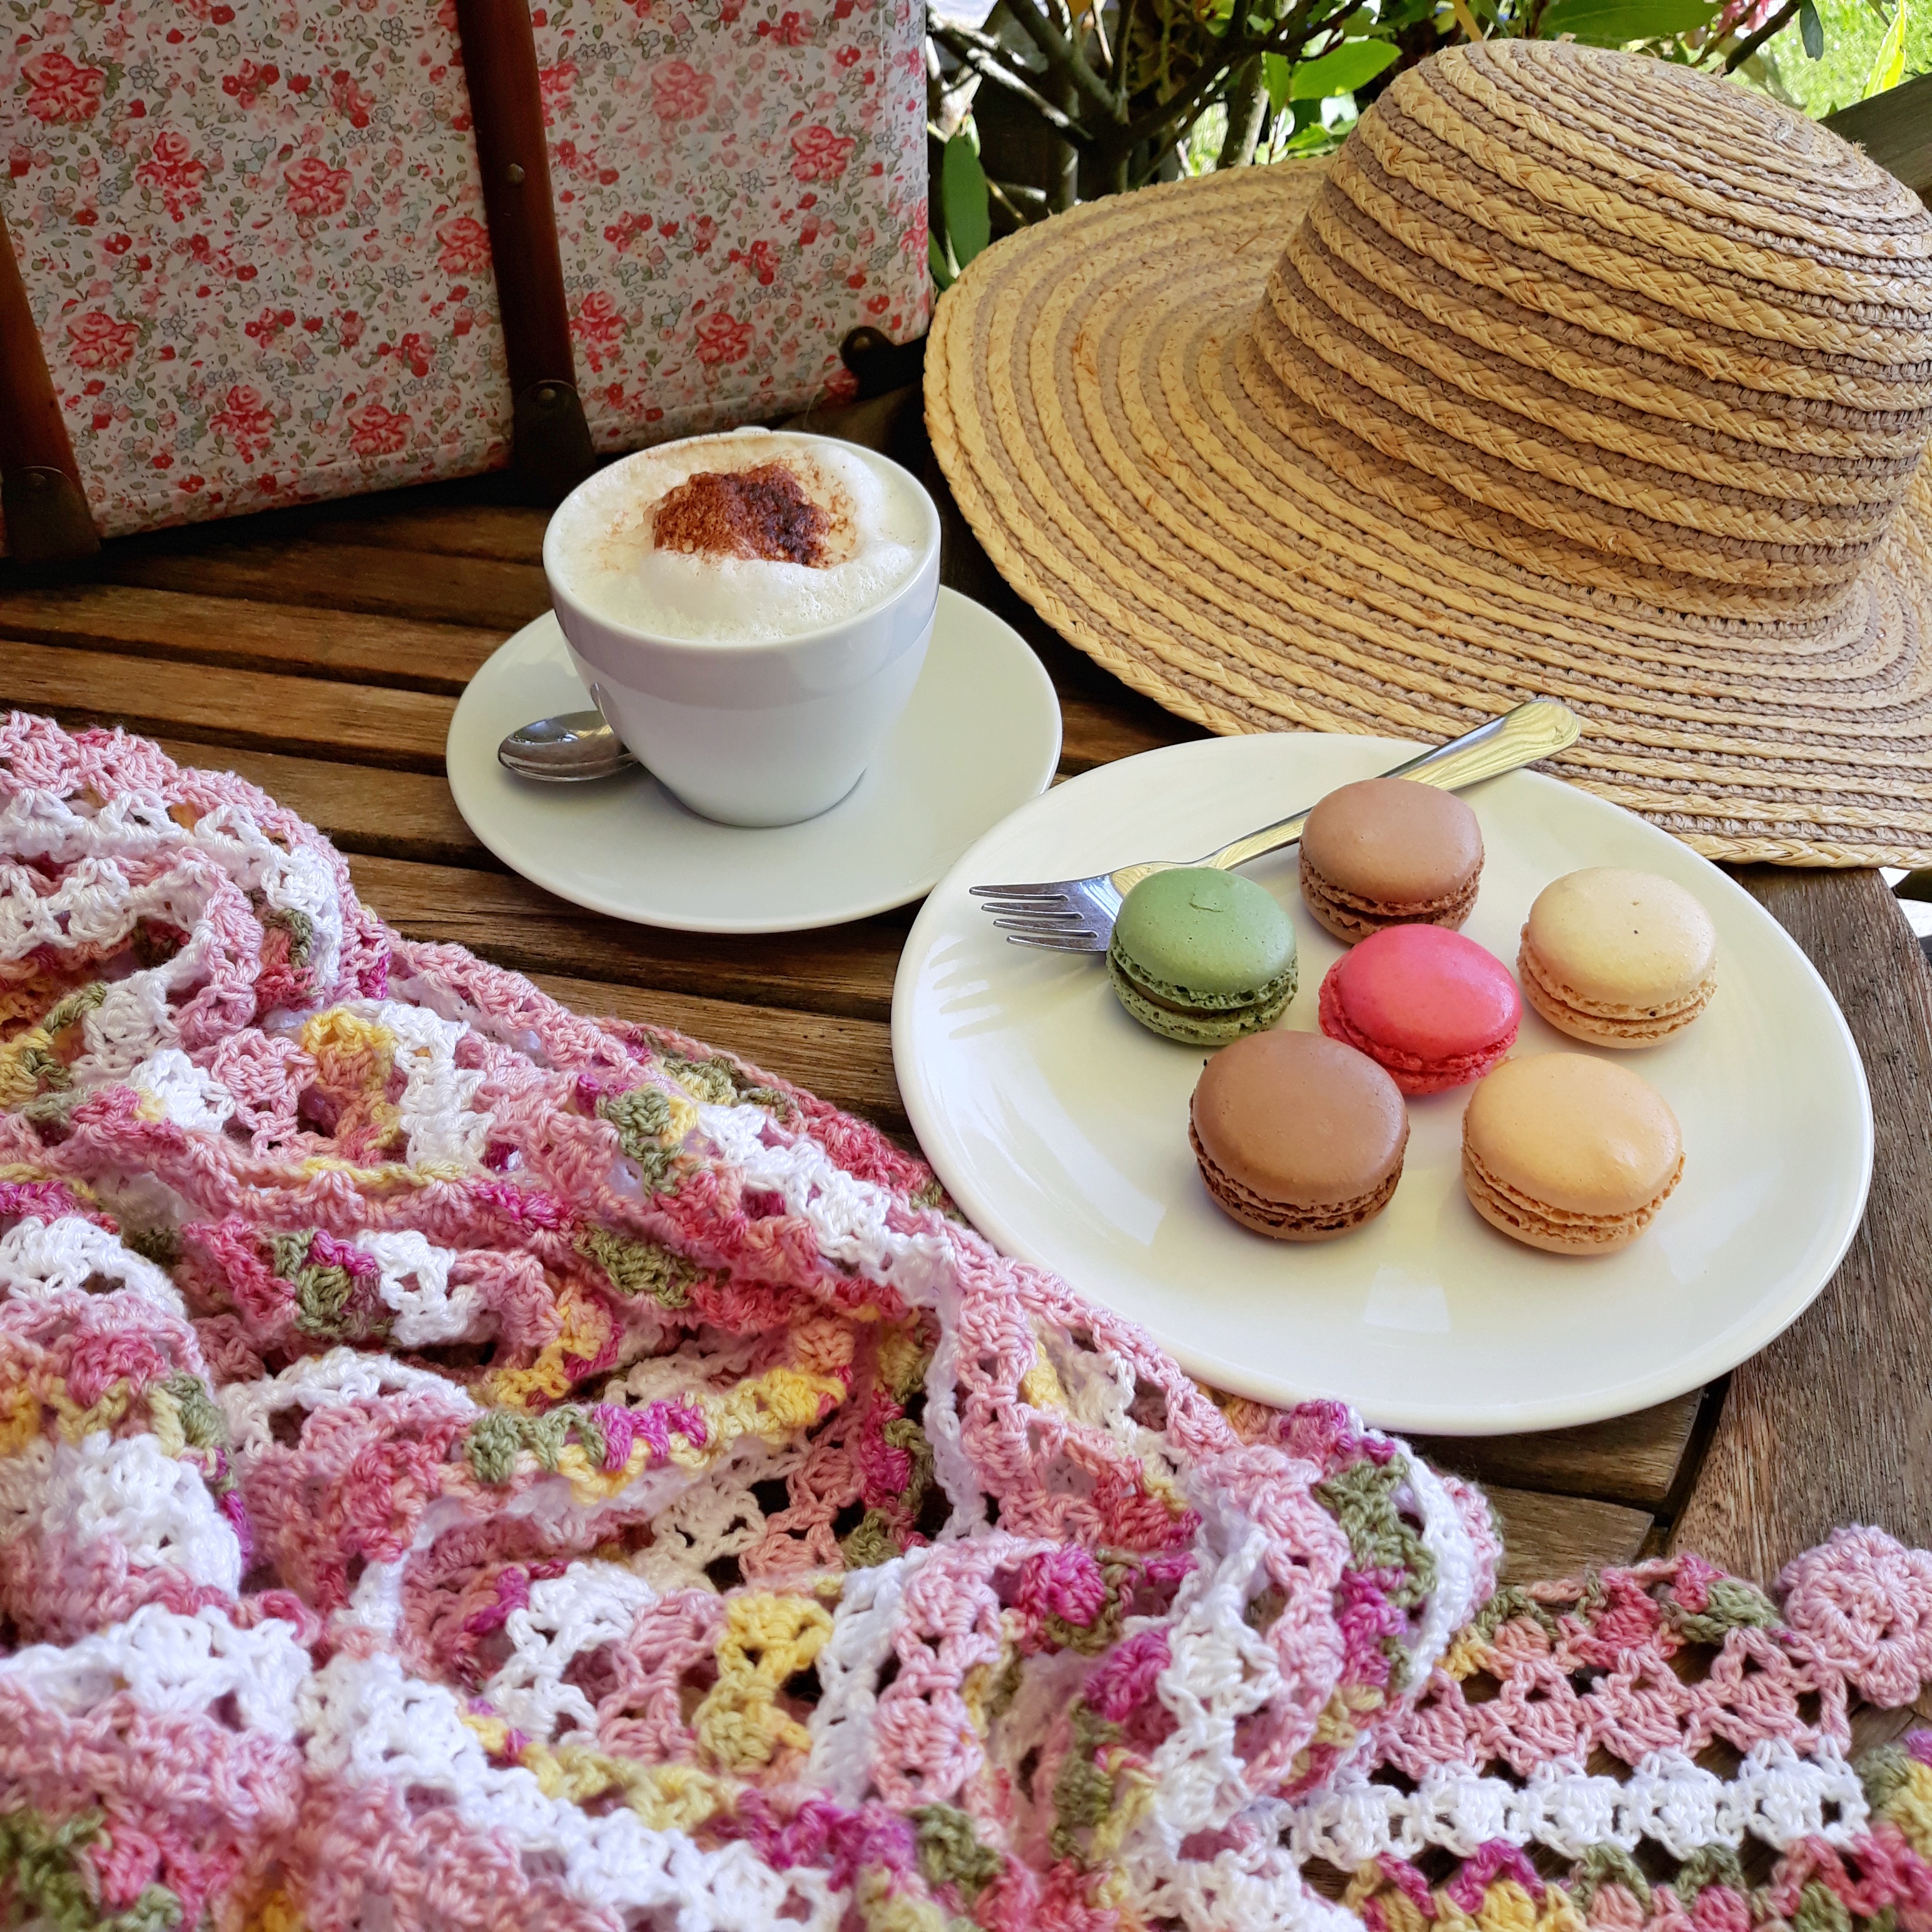 adelia_crochet_shawl_on_table_with_macarons.jpeg